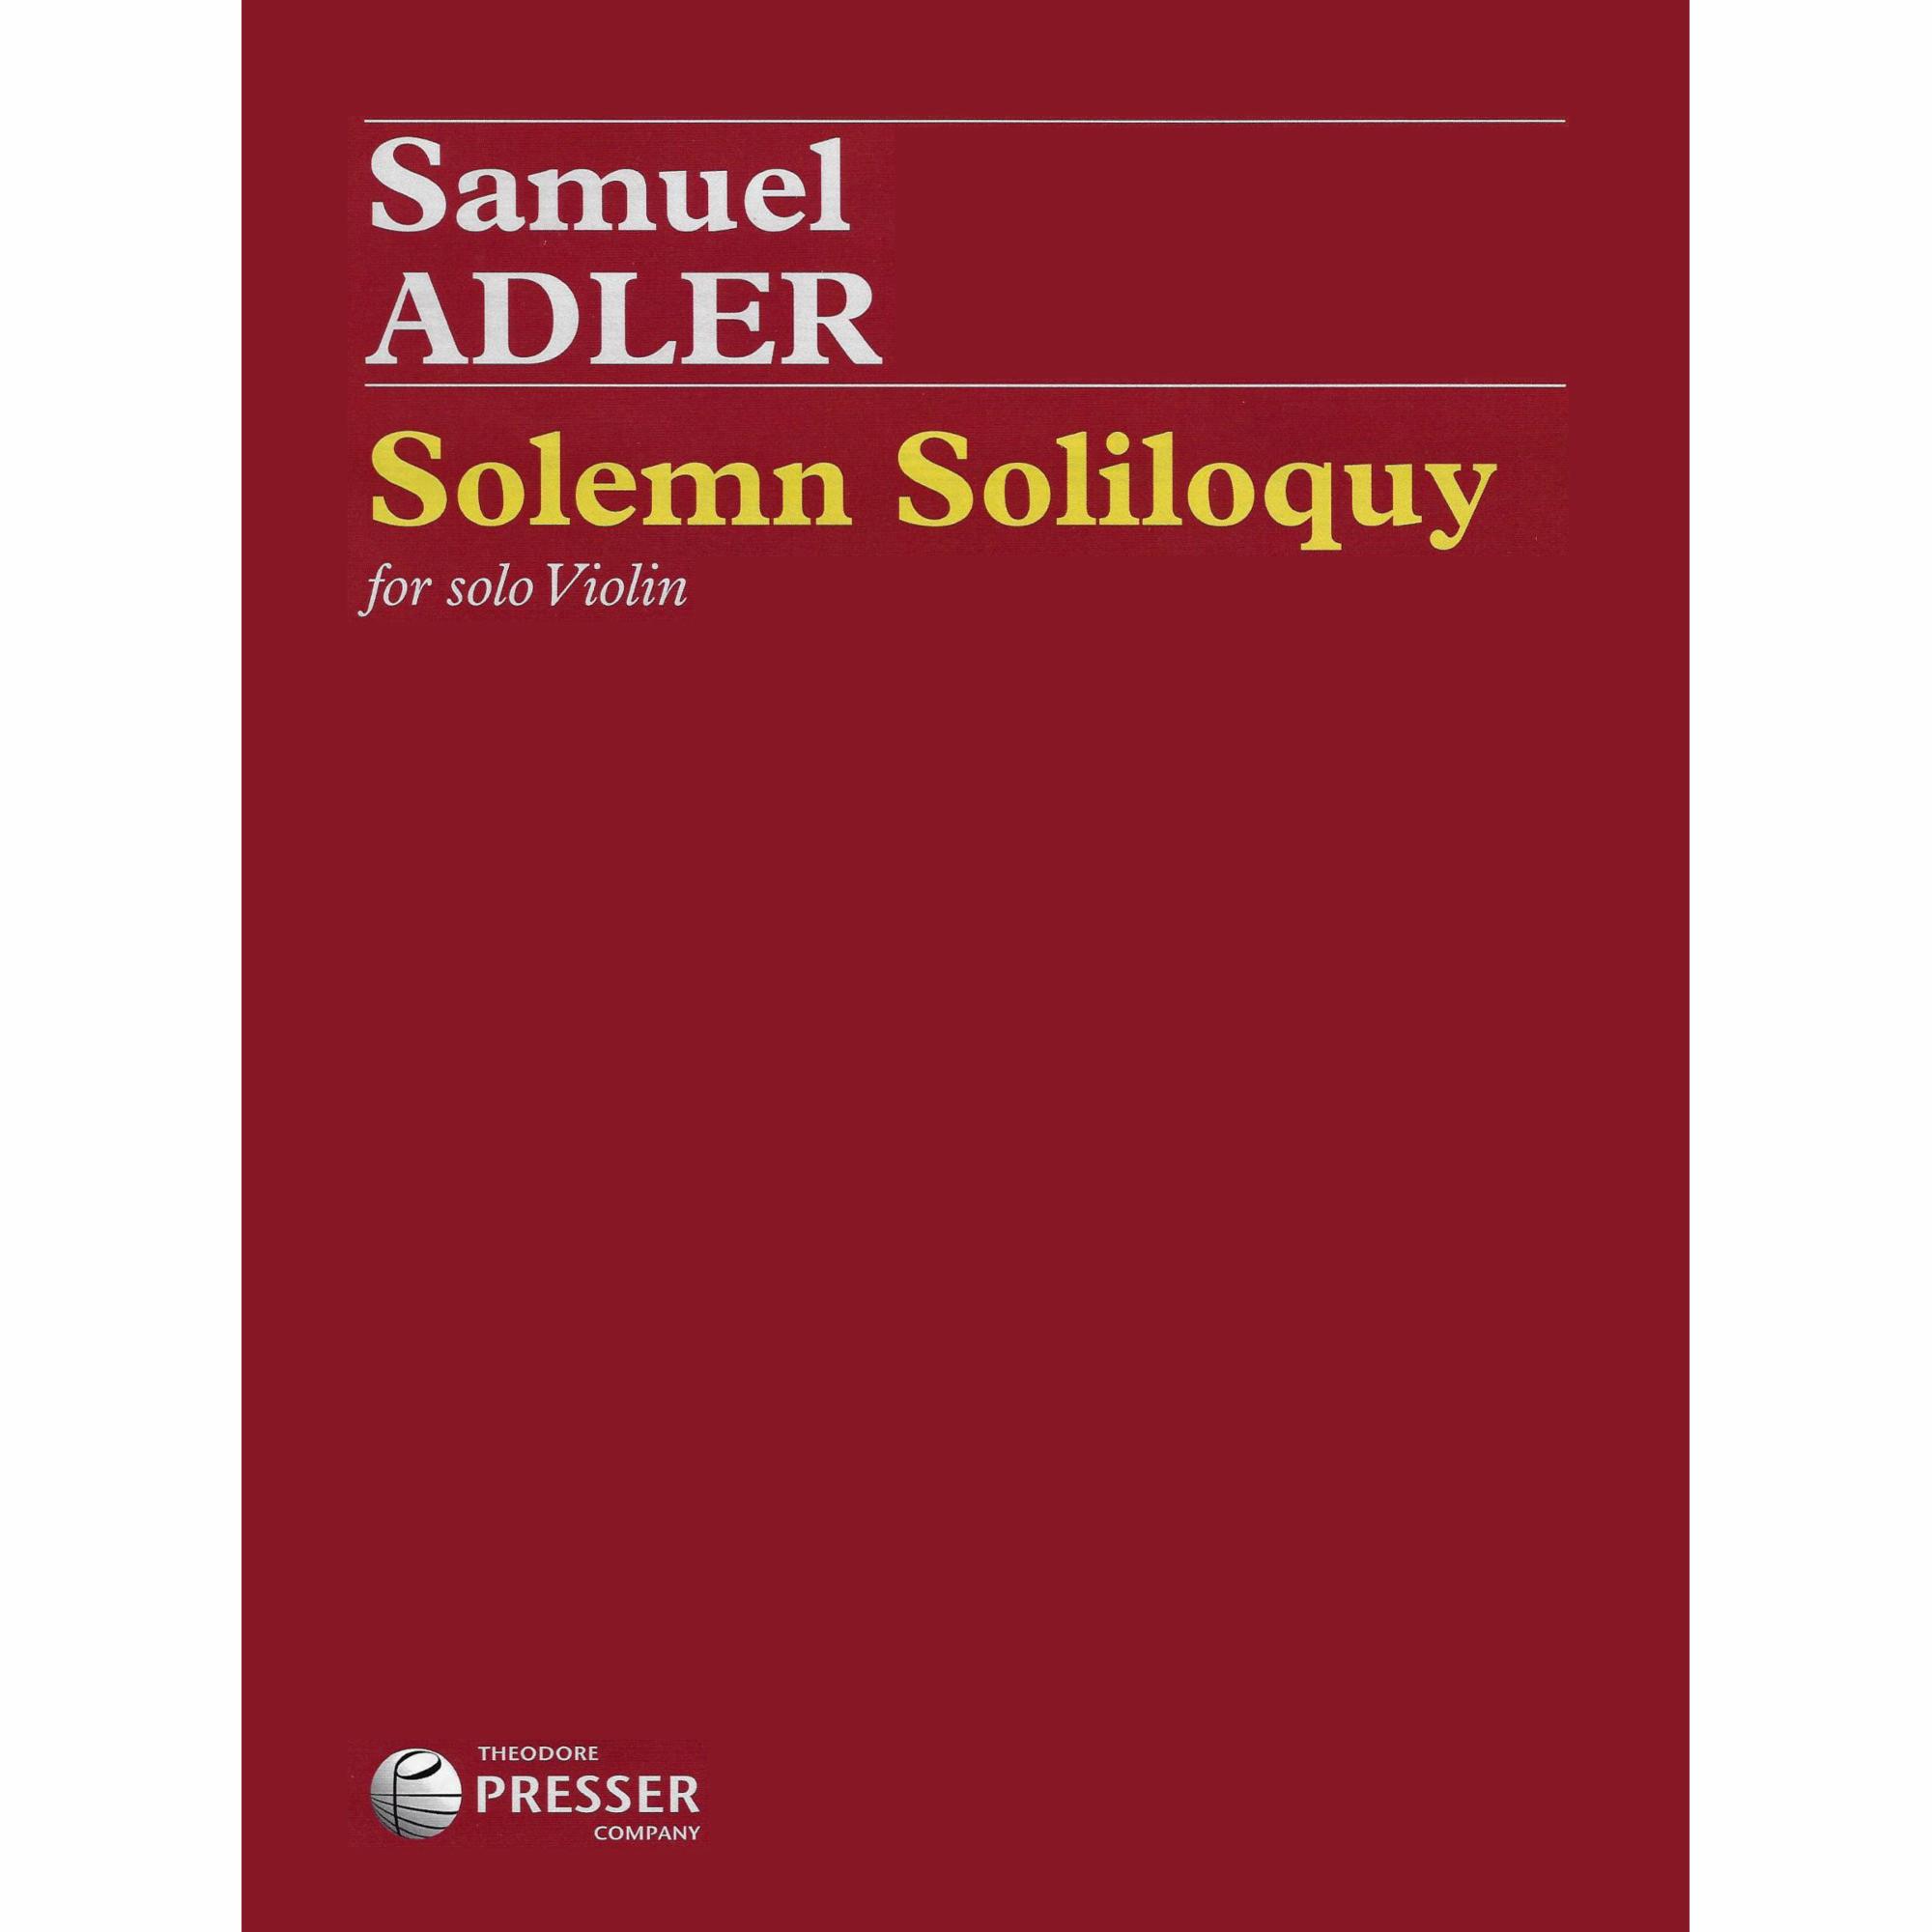 Solemn Soliloquy for Solo Violin